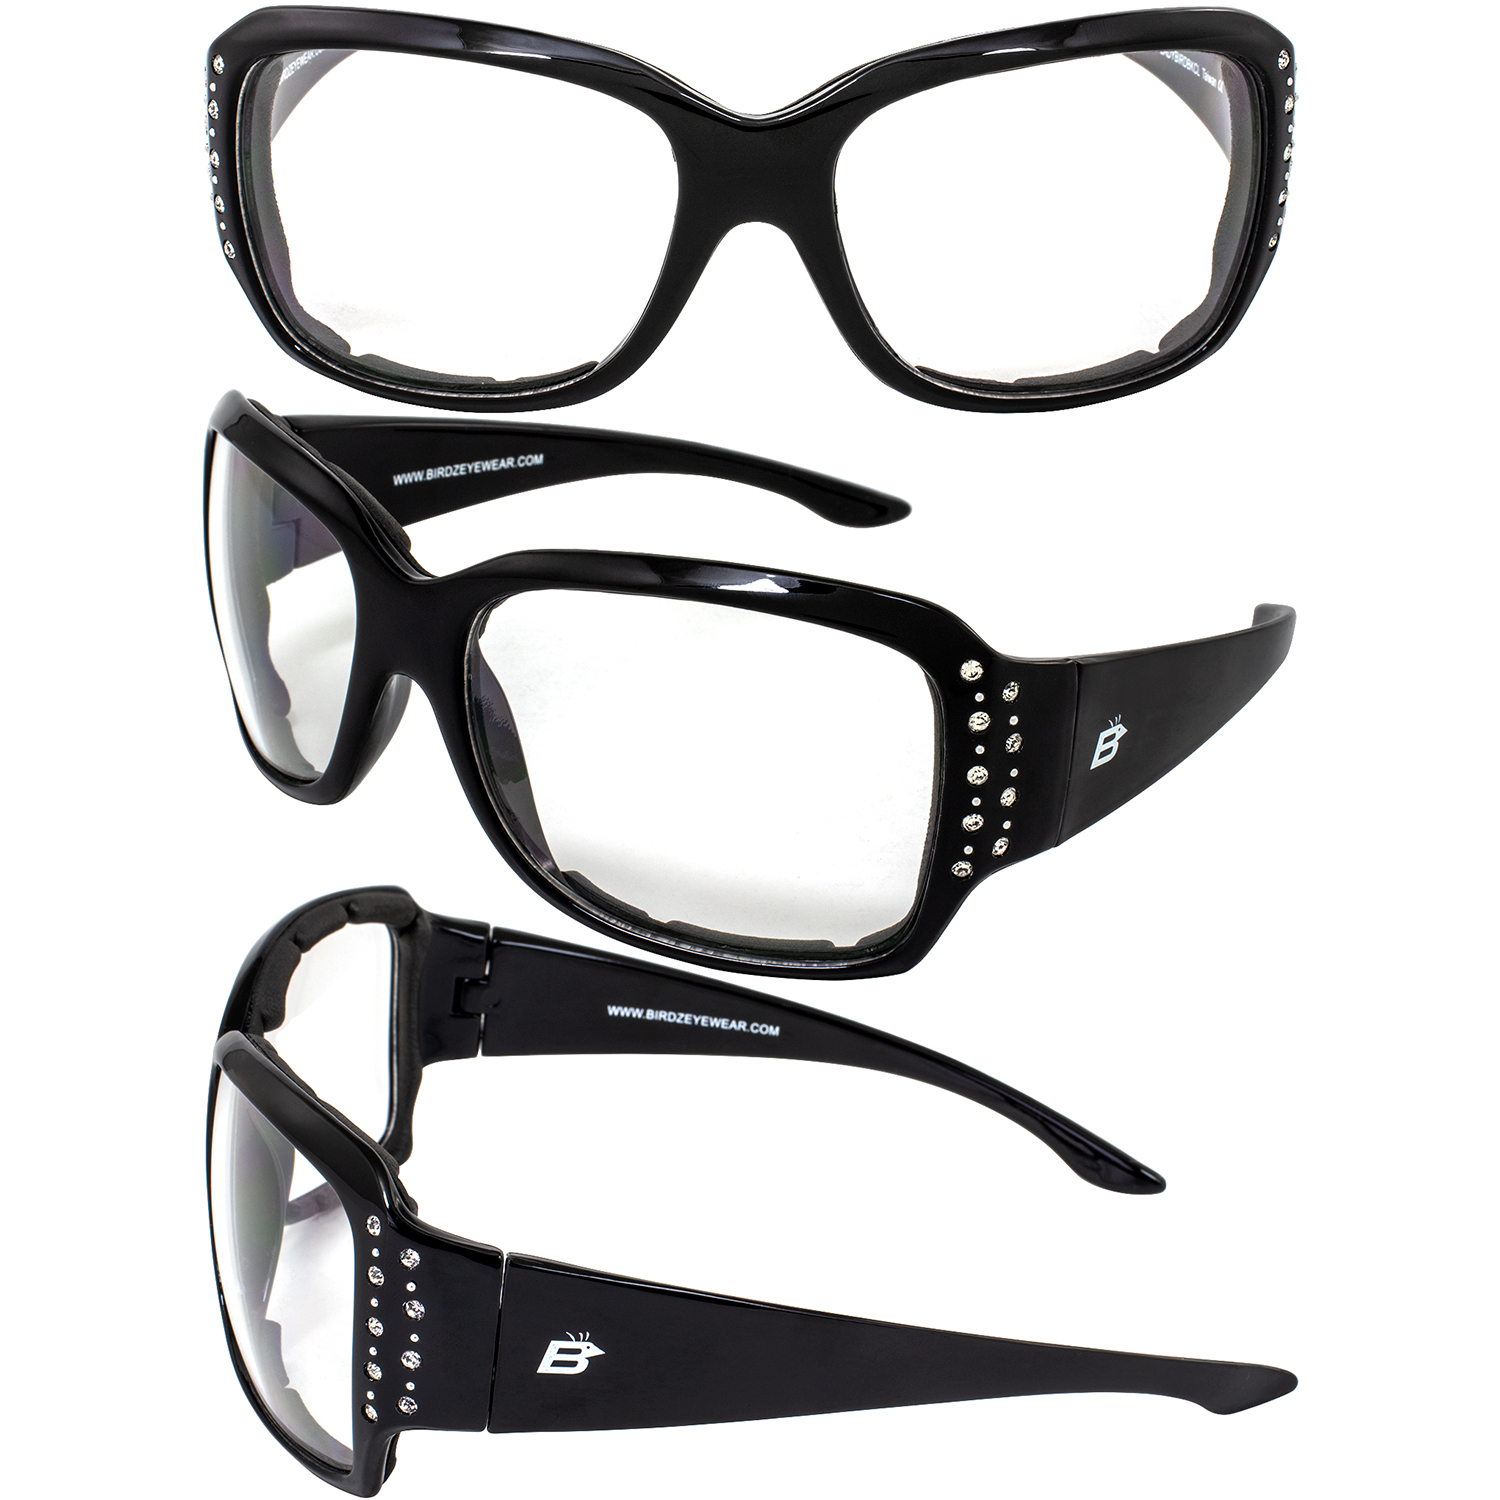 Birdz Eyewear LadyBird Padded Motorcycle Sunglasses Glasses for Women Bling Rhinestone Accents 3 Pairs Black Frame w/Clear Smoke & Driving Mirror Lenses - image 4 of 9